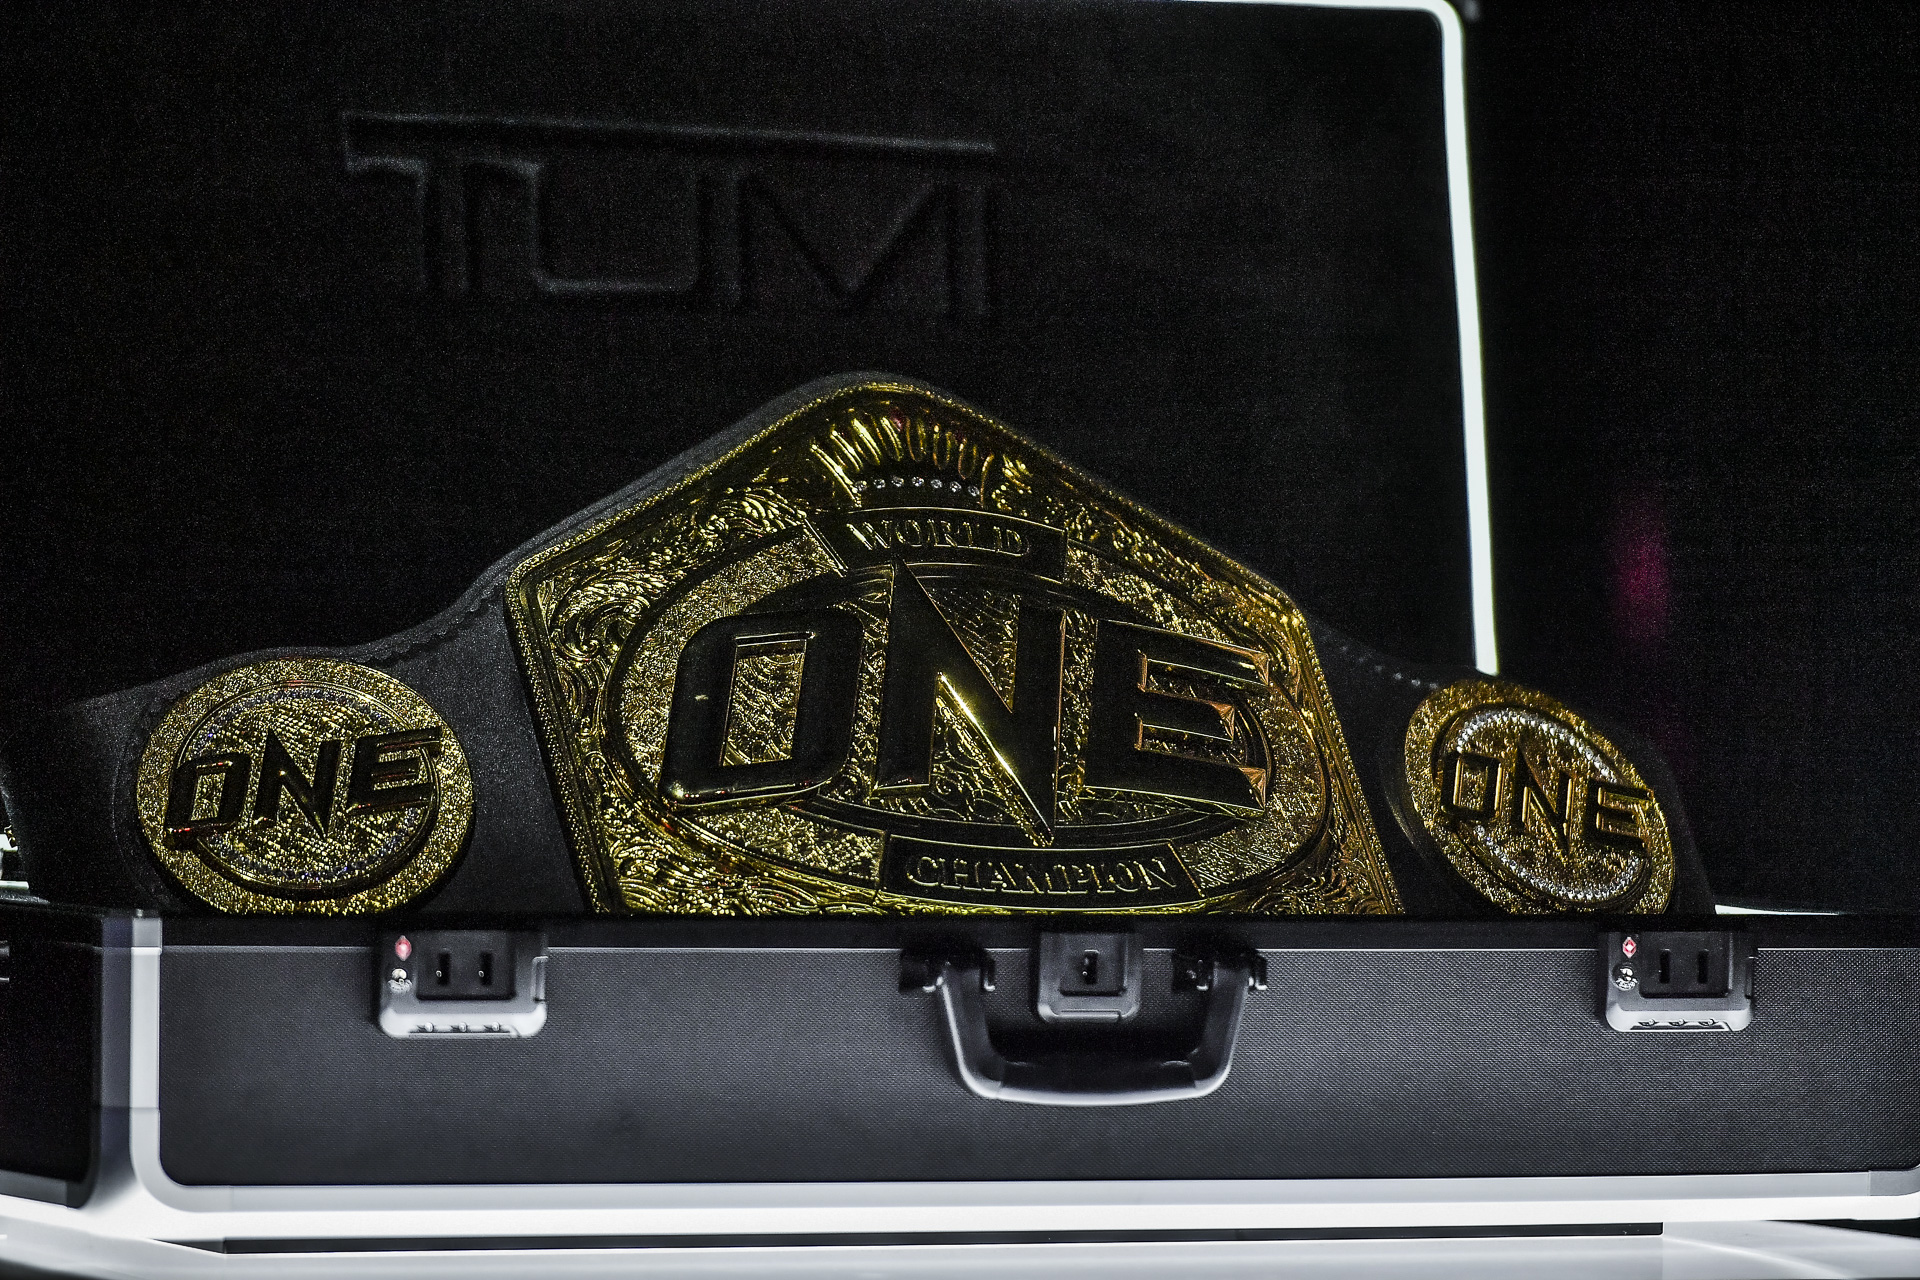 ONE Championship's new world championship belt.